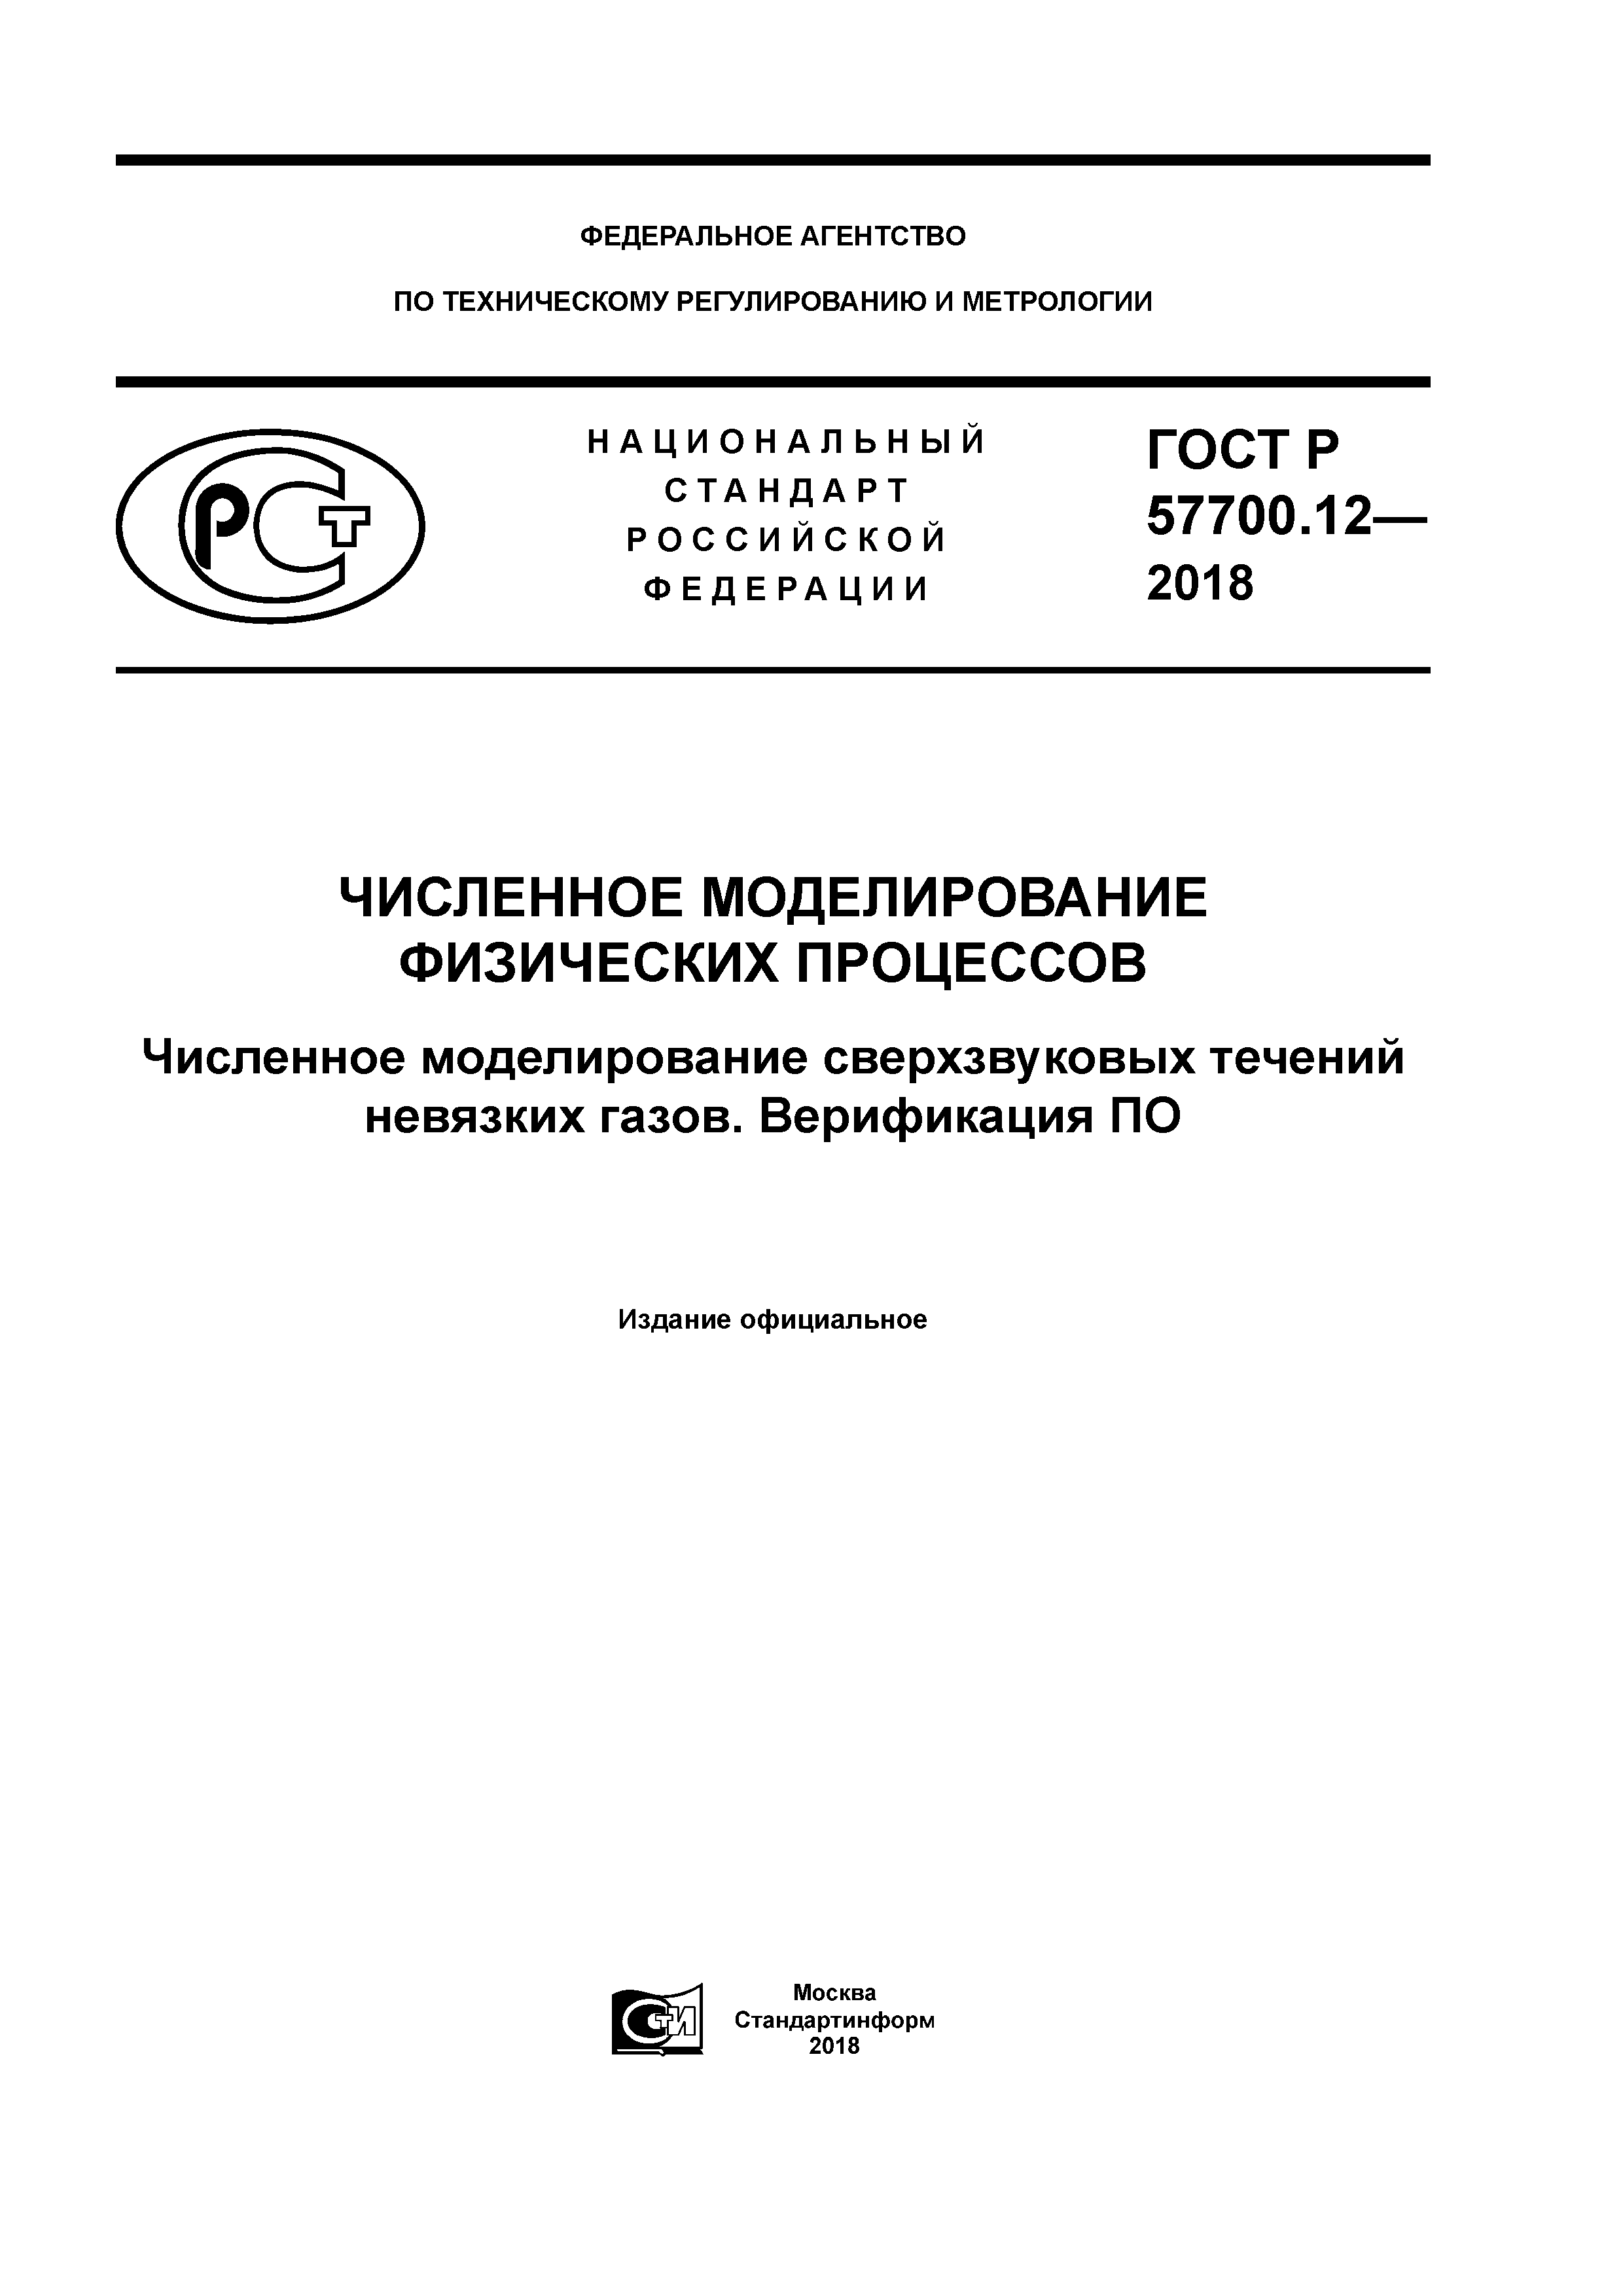 ГОСТ Р 57700.12-2018